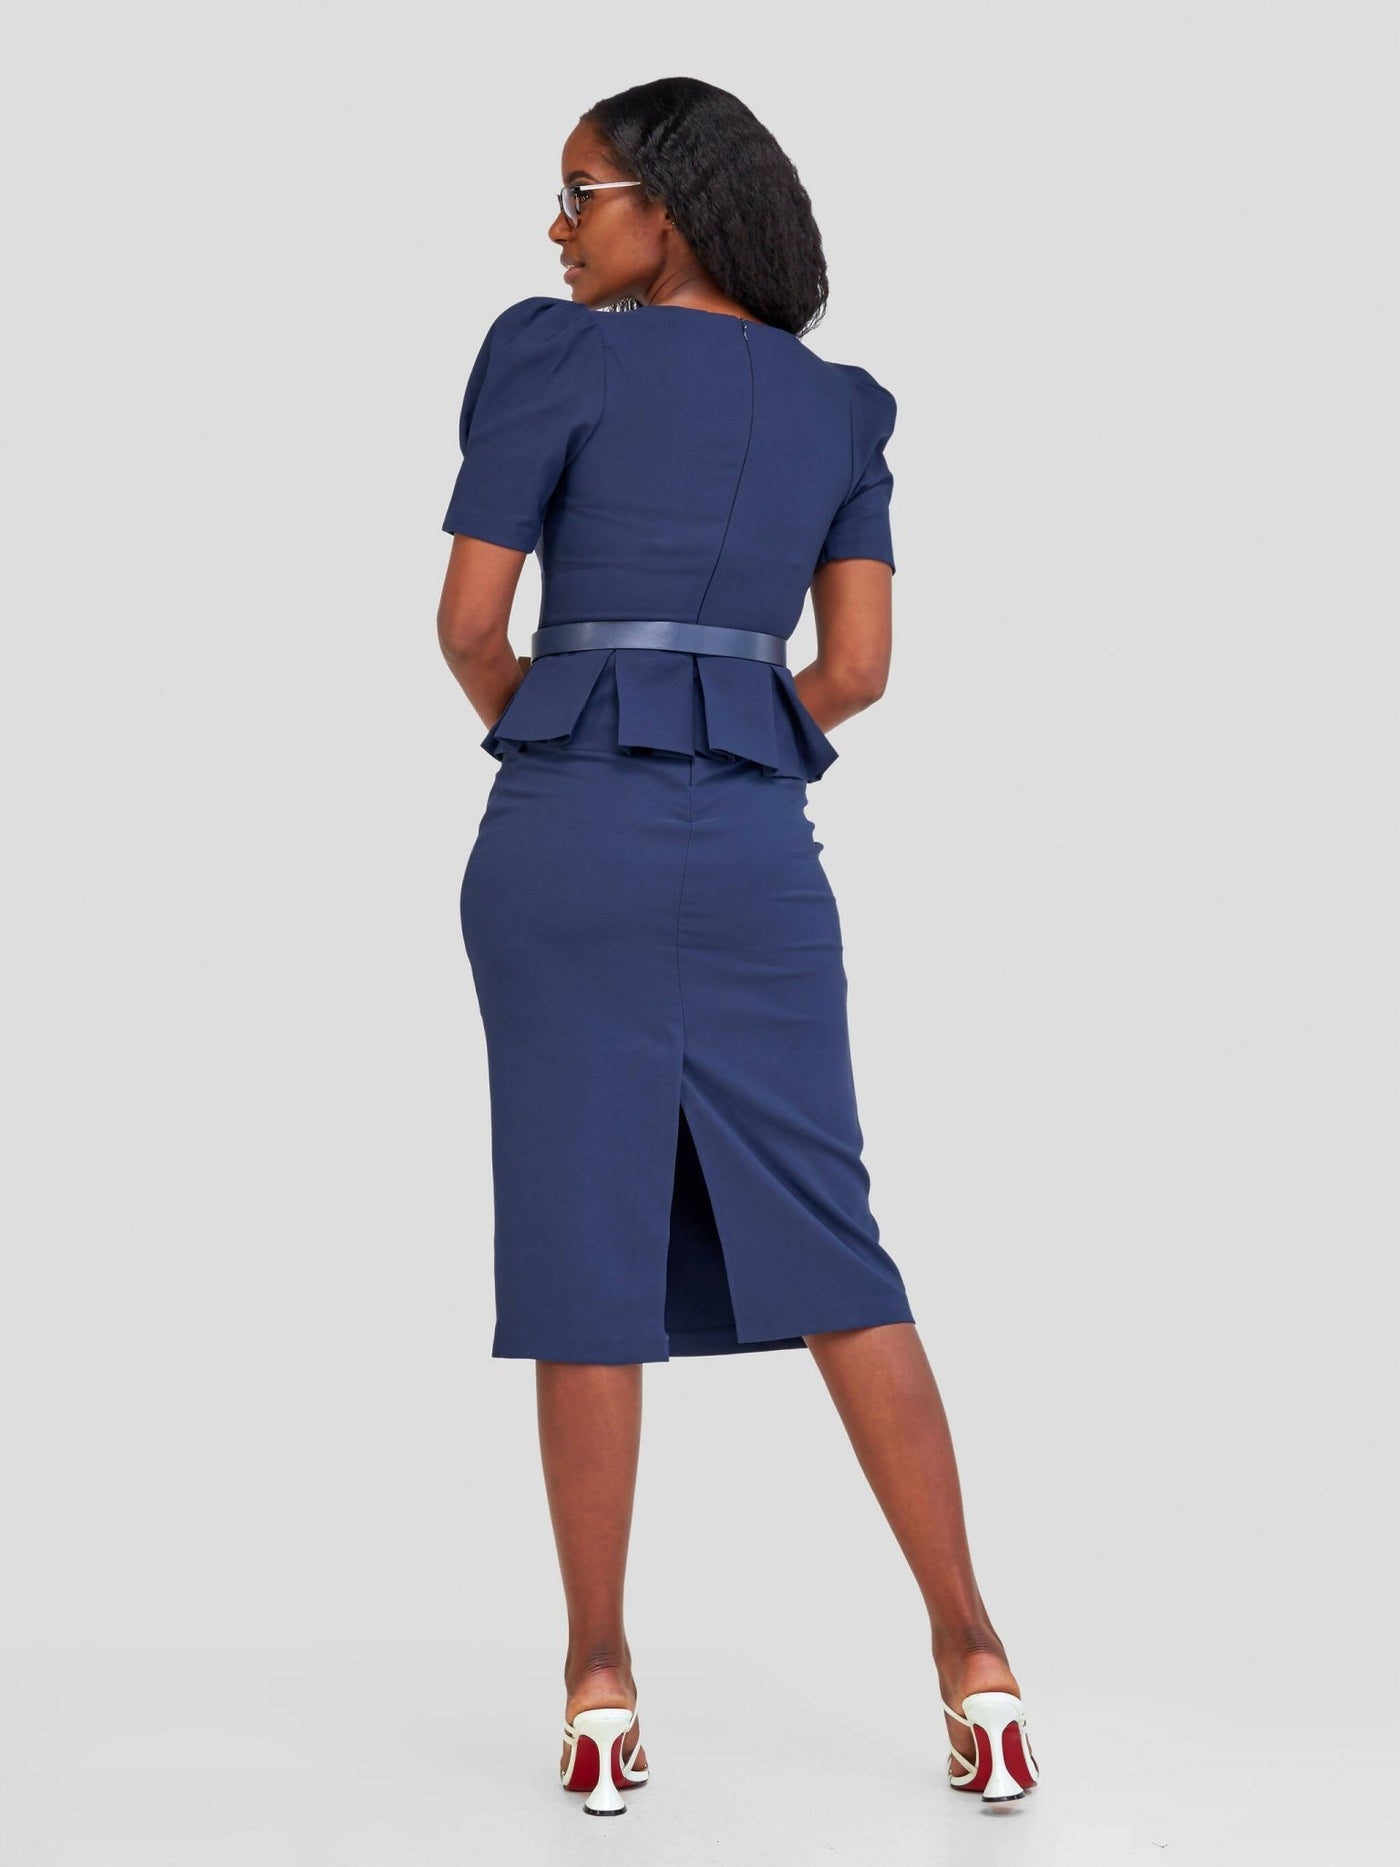 The Fashion Frenzy Belted Peplum Dress - Navy Blue - Shopzetu